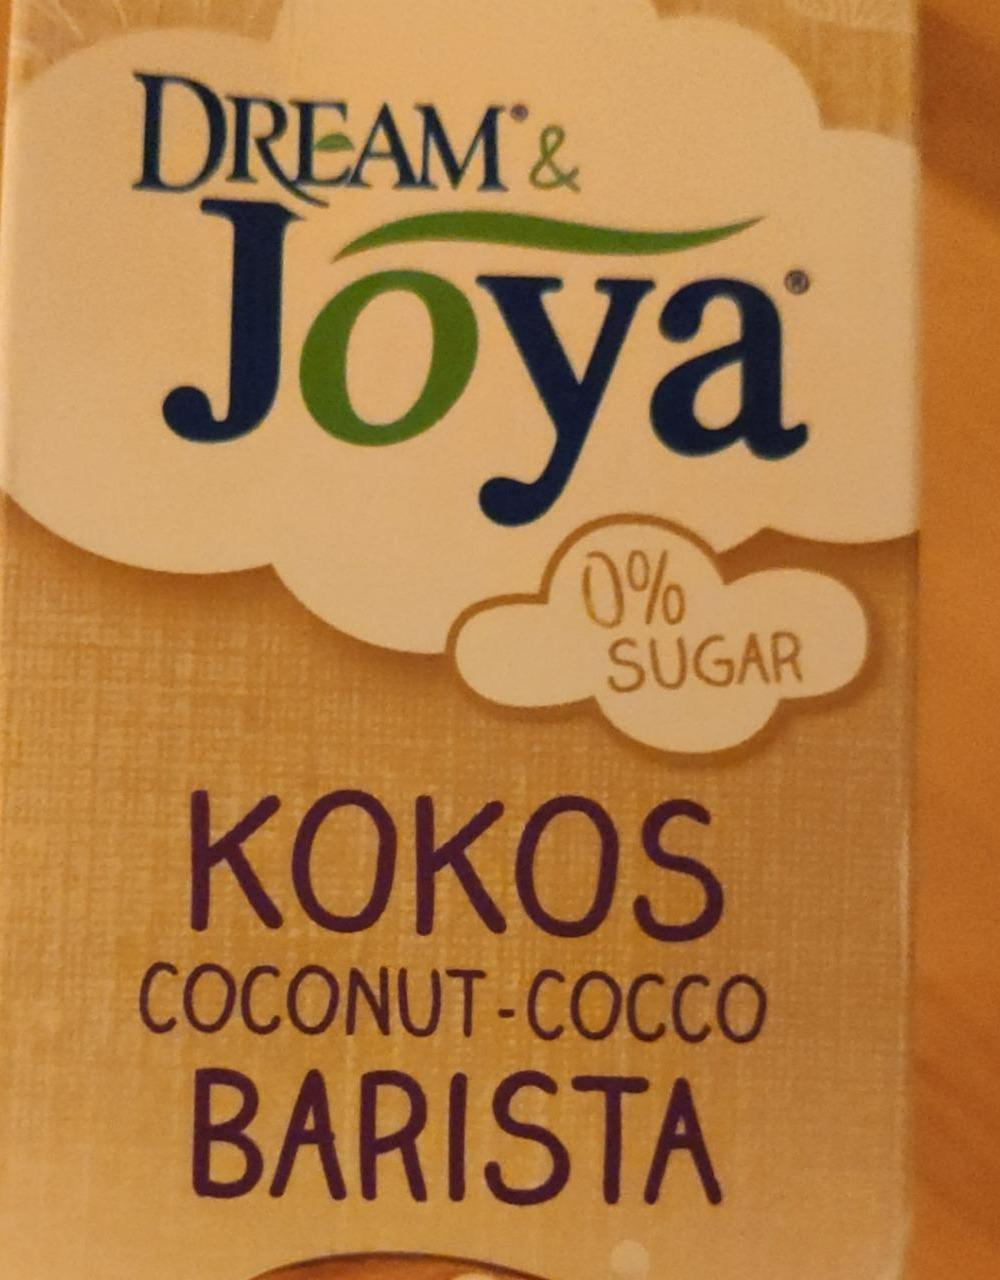 Fotografie - Kokos coconut-cocco barista Dream & Joya